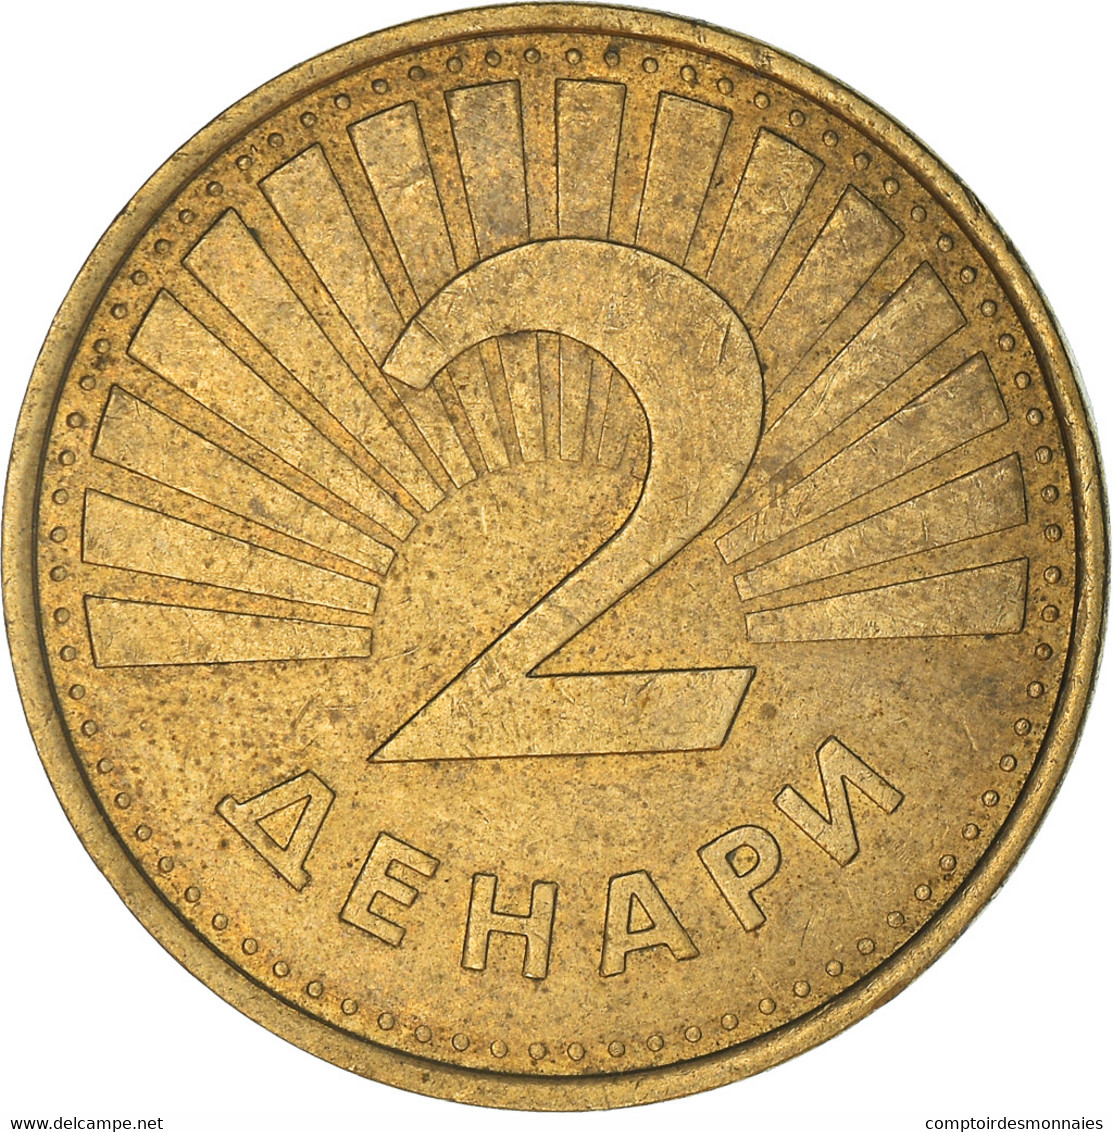 Monnaie, Macédoine, 2 Denari, 2006, TTB, Laiton, KM:3 - Macédoine Du Nord